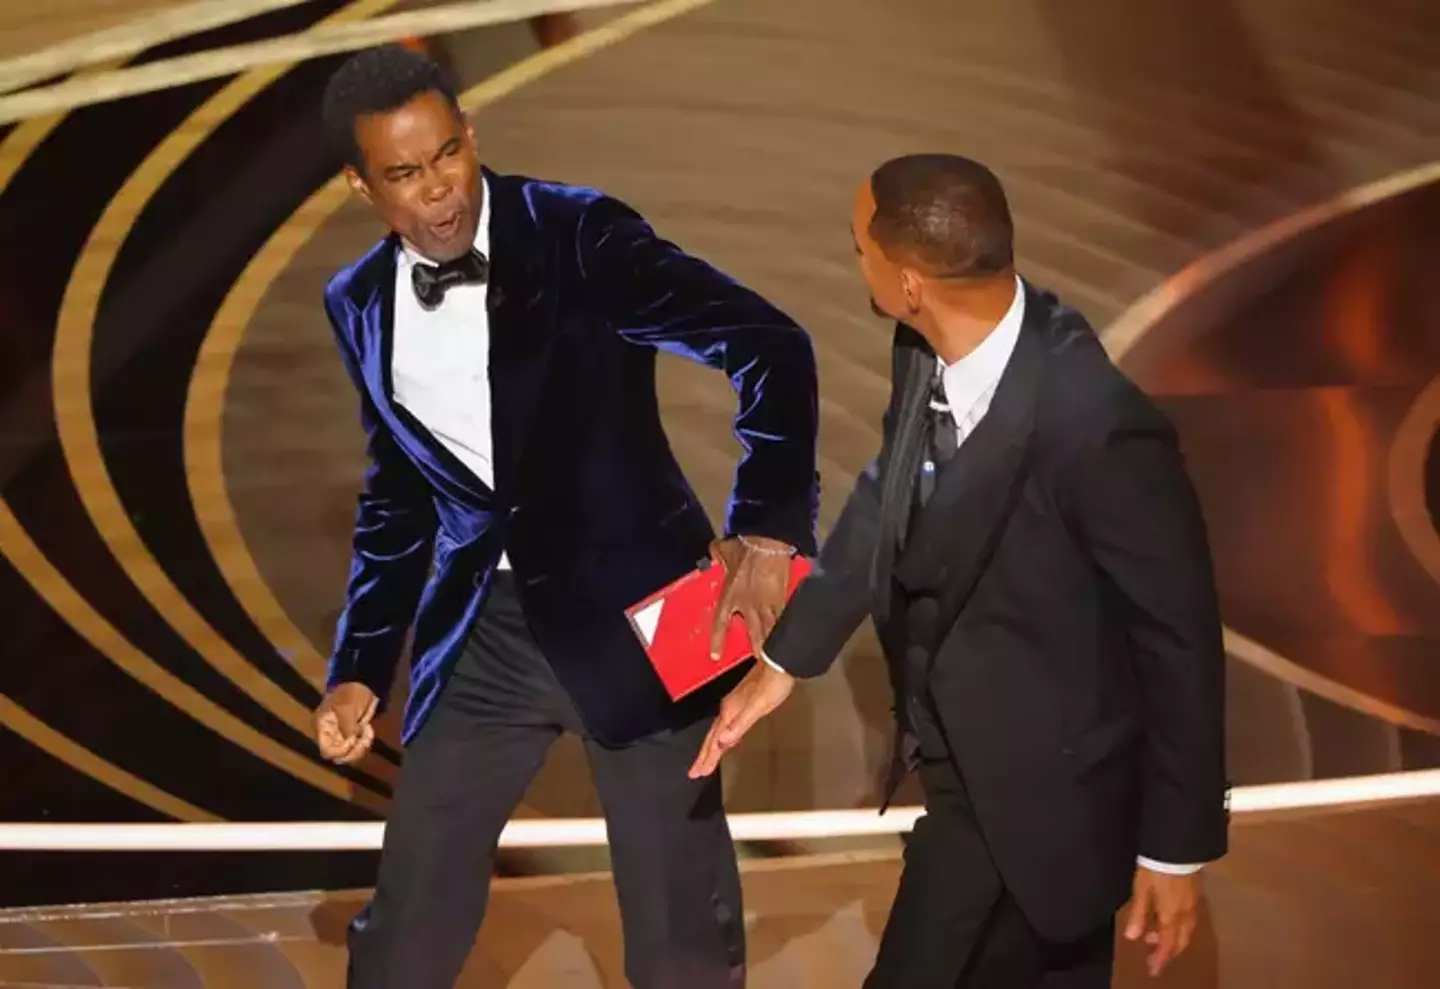 The infamous Oscars slap unfolded last year.